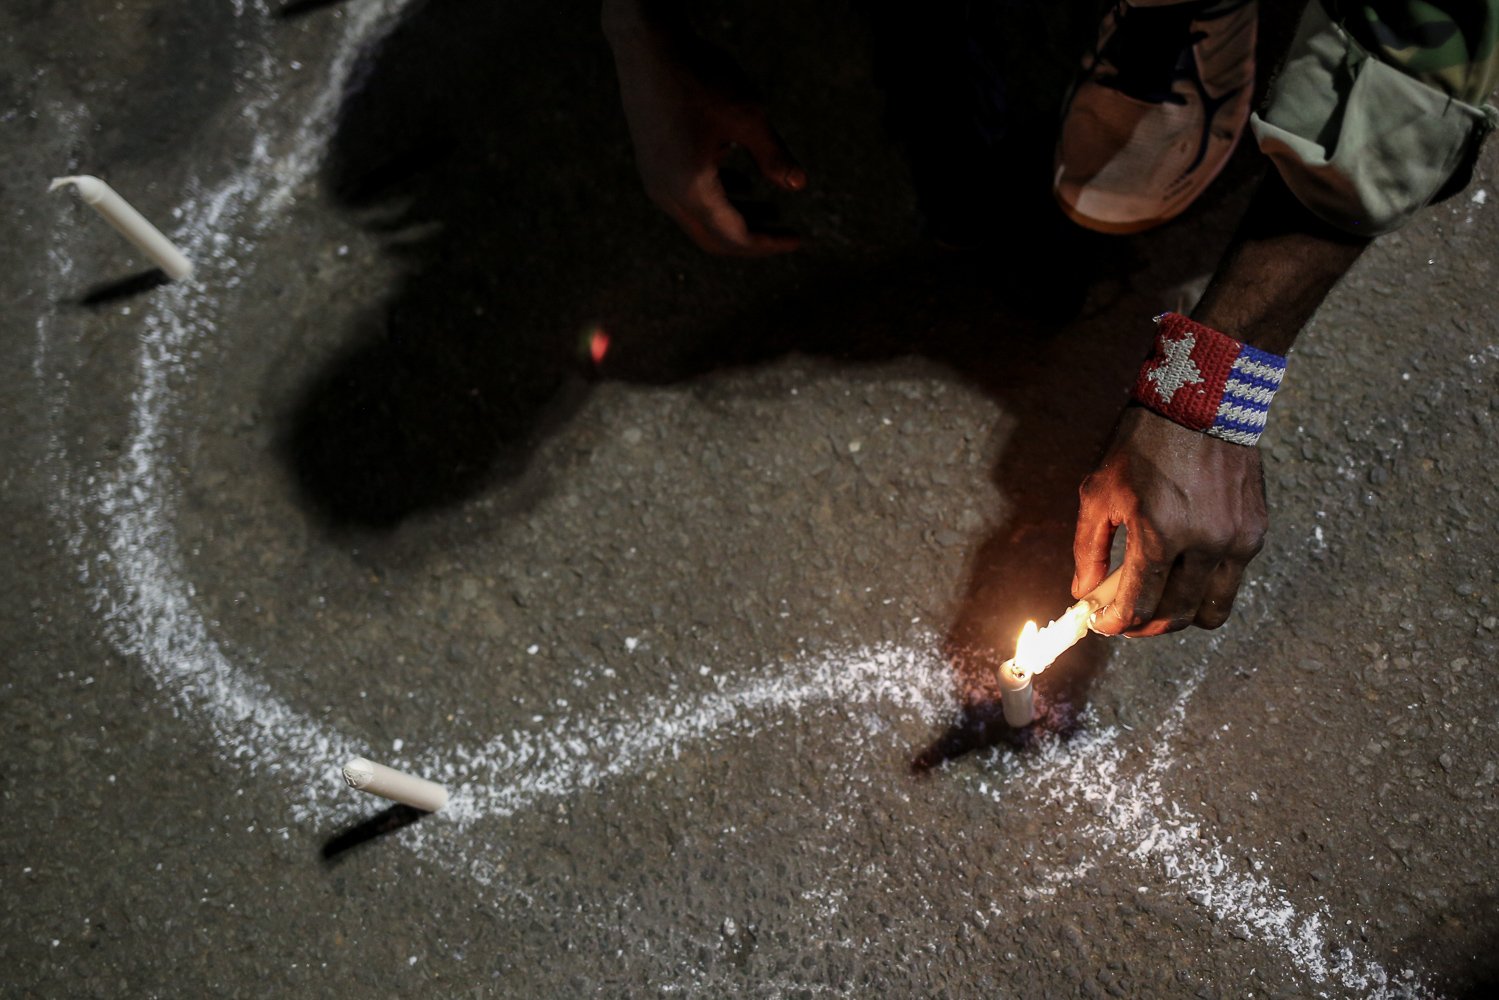 Massa yang tergabung dalam Front Mahasiswa Papua Peduli Korban Kekerasan menyalakan lilin saat berunjuk rasa di wilayah Patung Kuda, Jakarta, Jumat (16/9). Aksi seribu lilin tersebut dilakukan untuk solidaritas terhadap 4 korban mutilasi di Timika, Papua.